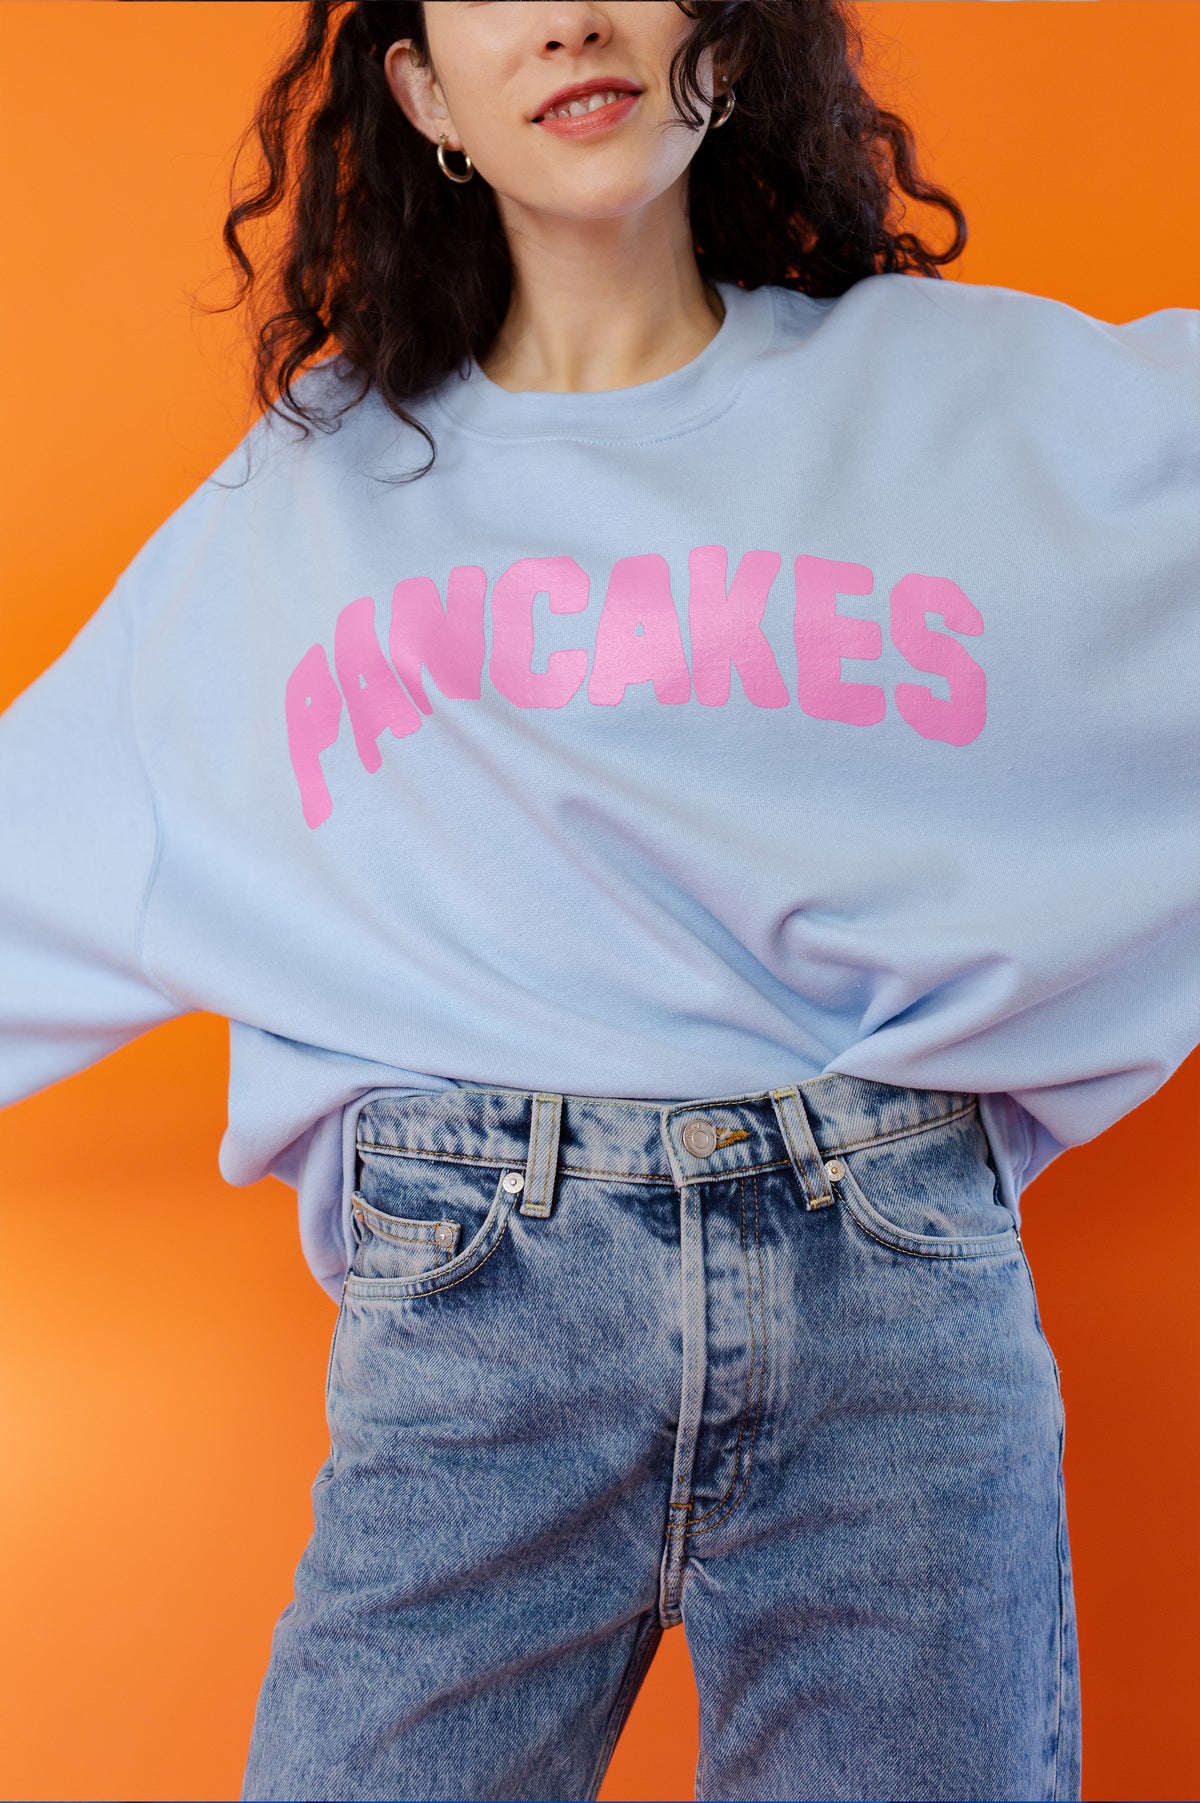 The Pancakes Oversized Sweatshirt